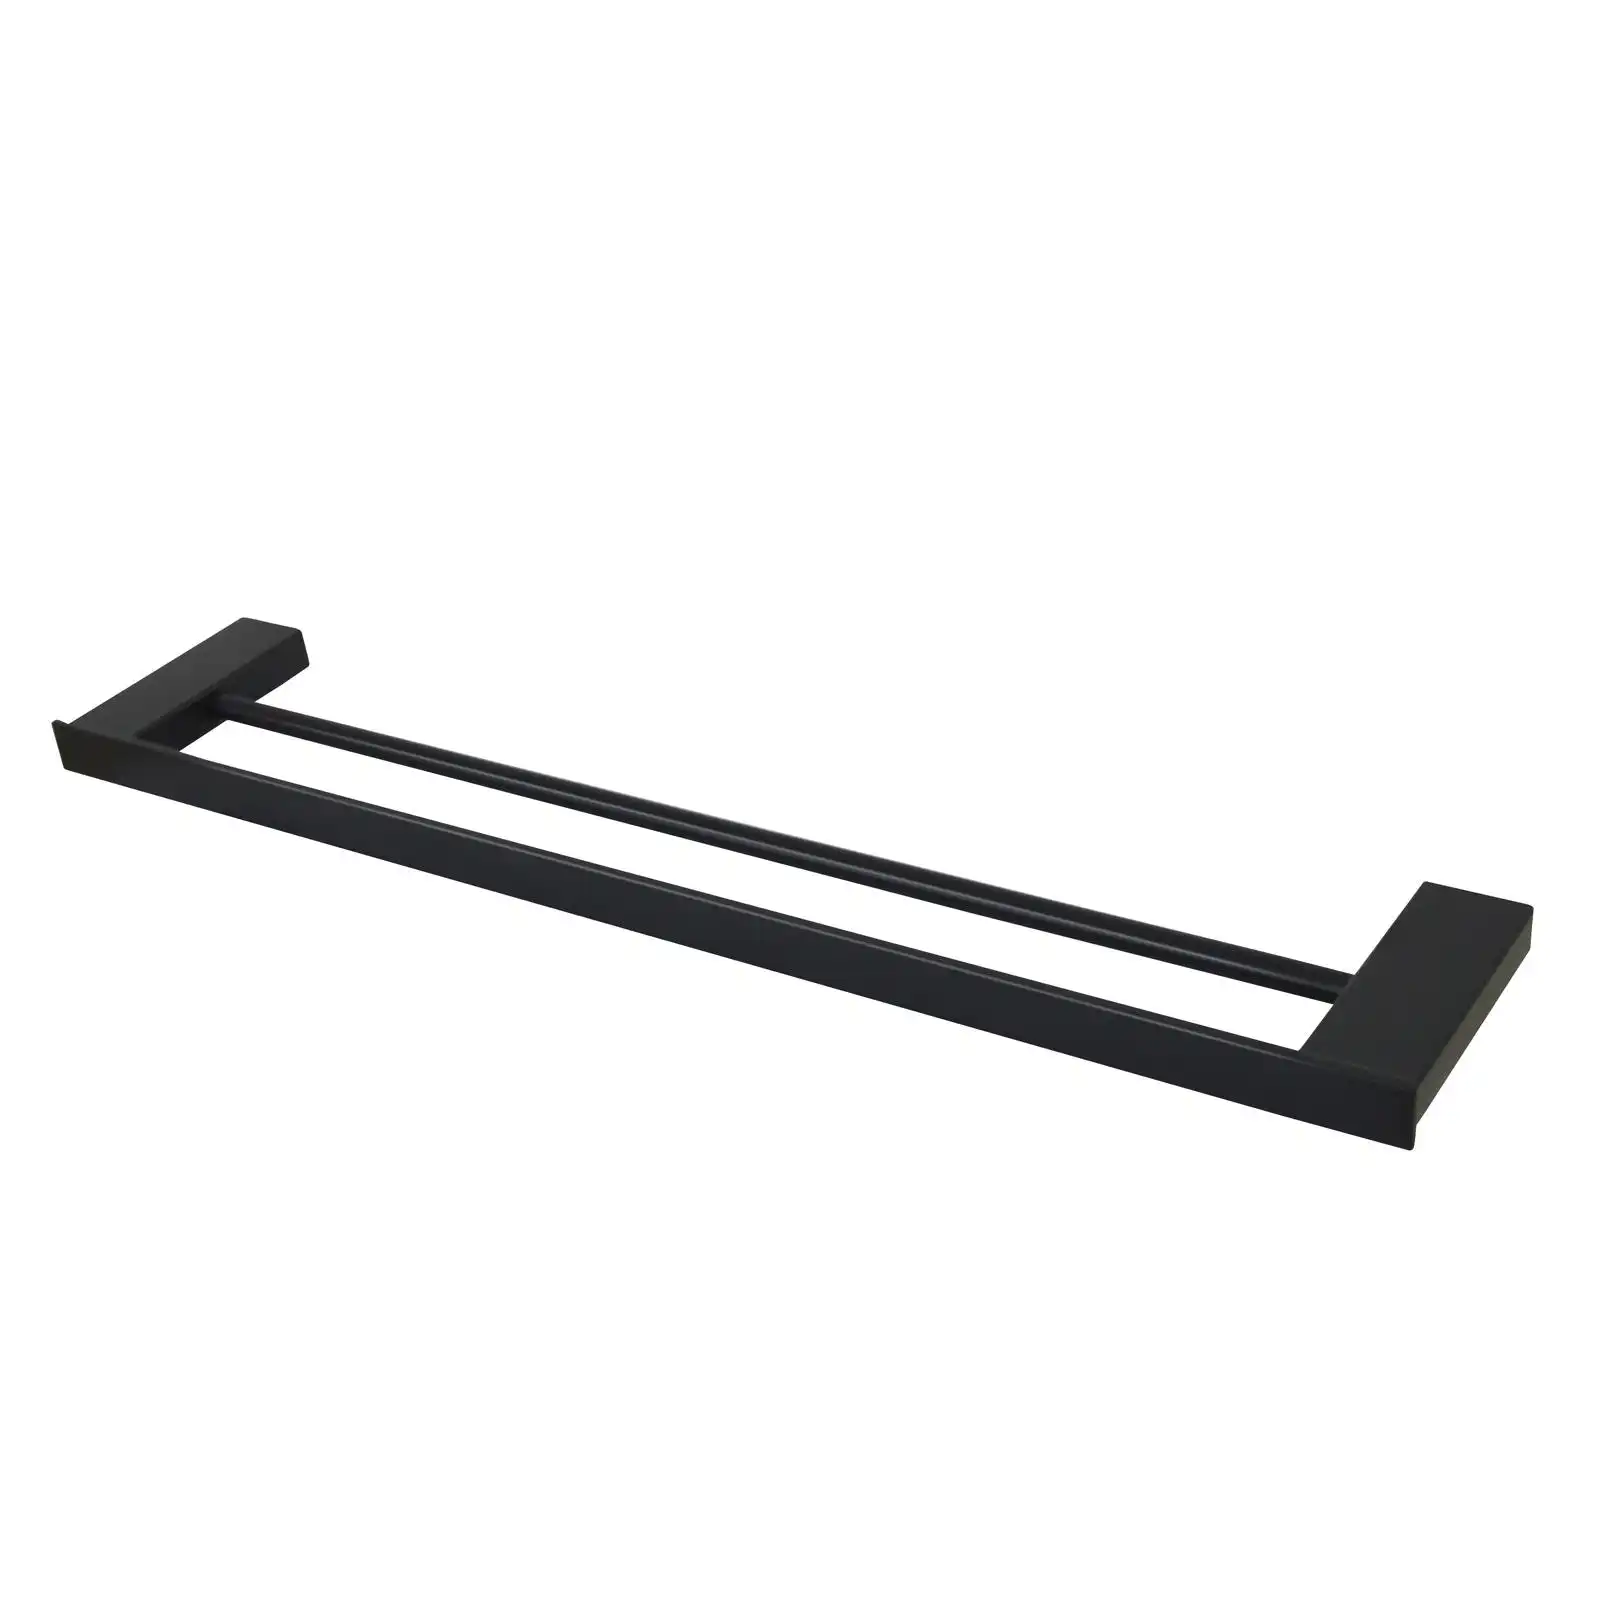 Double Towel Rail 60cm Rack Bar Holder Bathroom Accessories Black